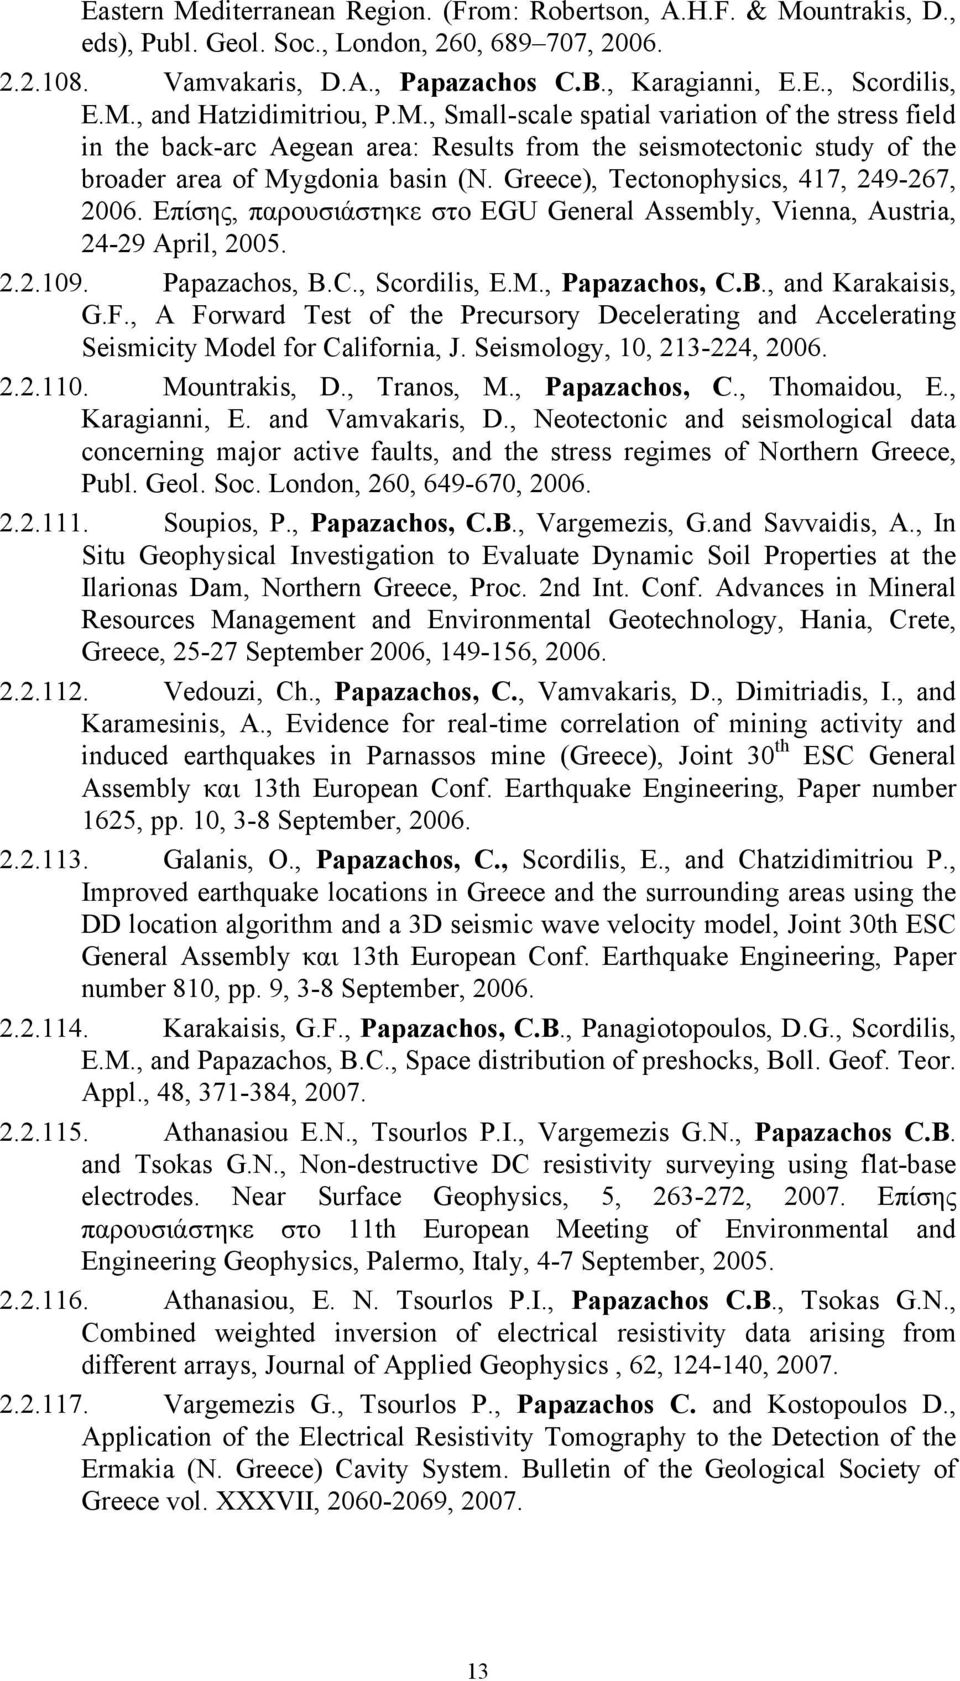 Greece), Tectonophysics, 417, 249-267, 2006. Επίσης, παρουσιάστηκε στο EGU General Assembly, Vienna, Austria, 24-29 April, 2005. 2.2.109. Papazachos, B.C., Scordilis, E.M., Papazachos, C.B., and Karakaisis, G.